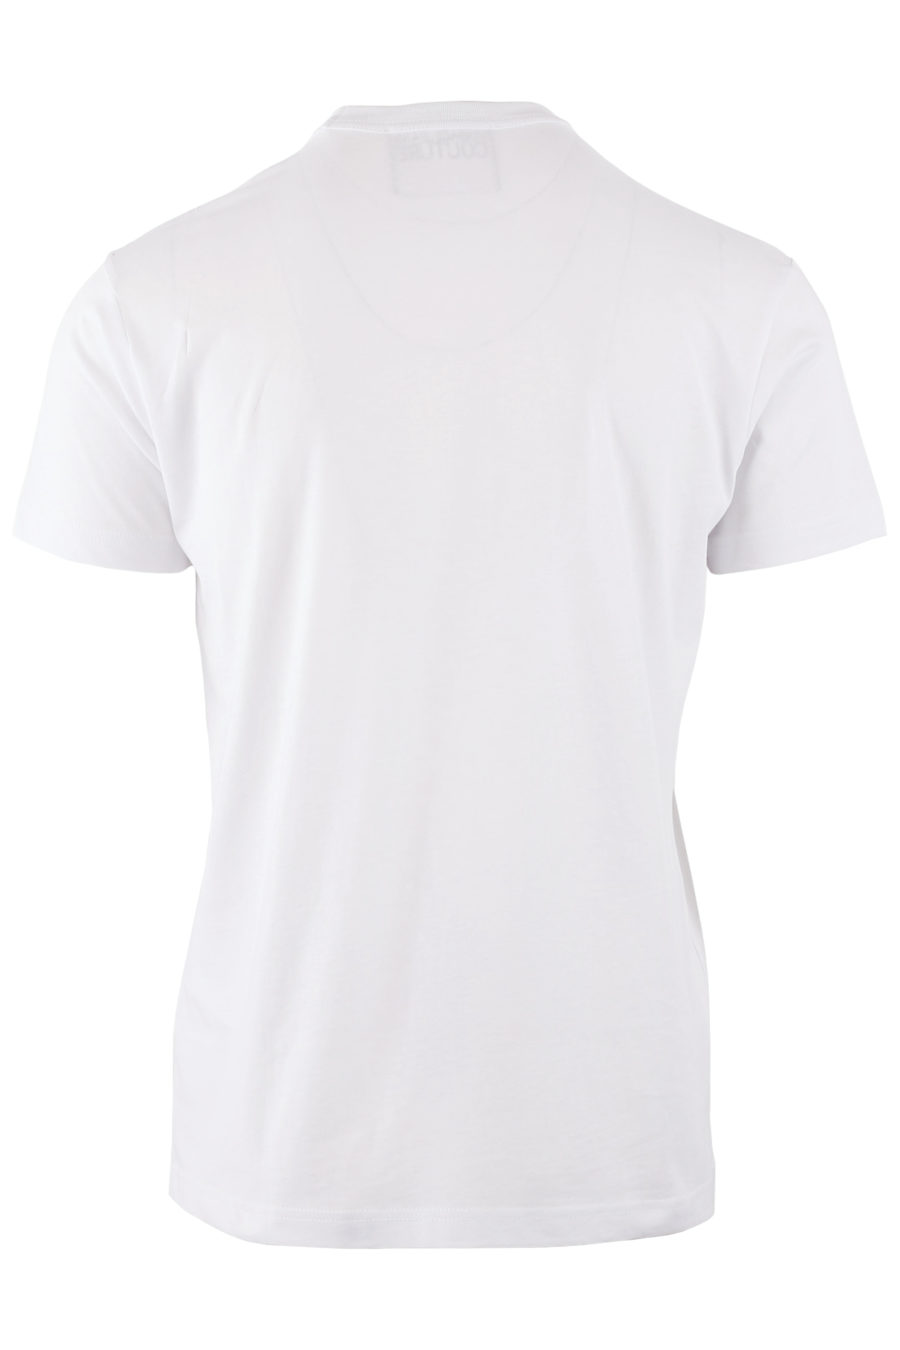 White t-shirt with large logo black - ffd9189bc4df2c18229d866379b9b0a094071dfd